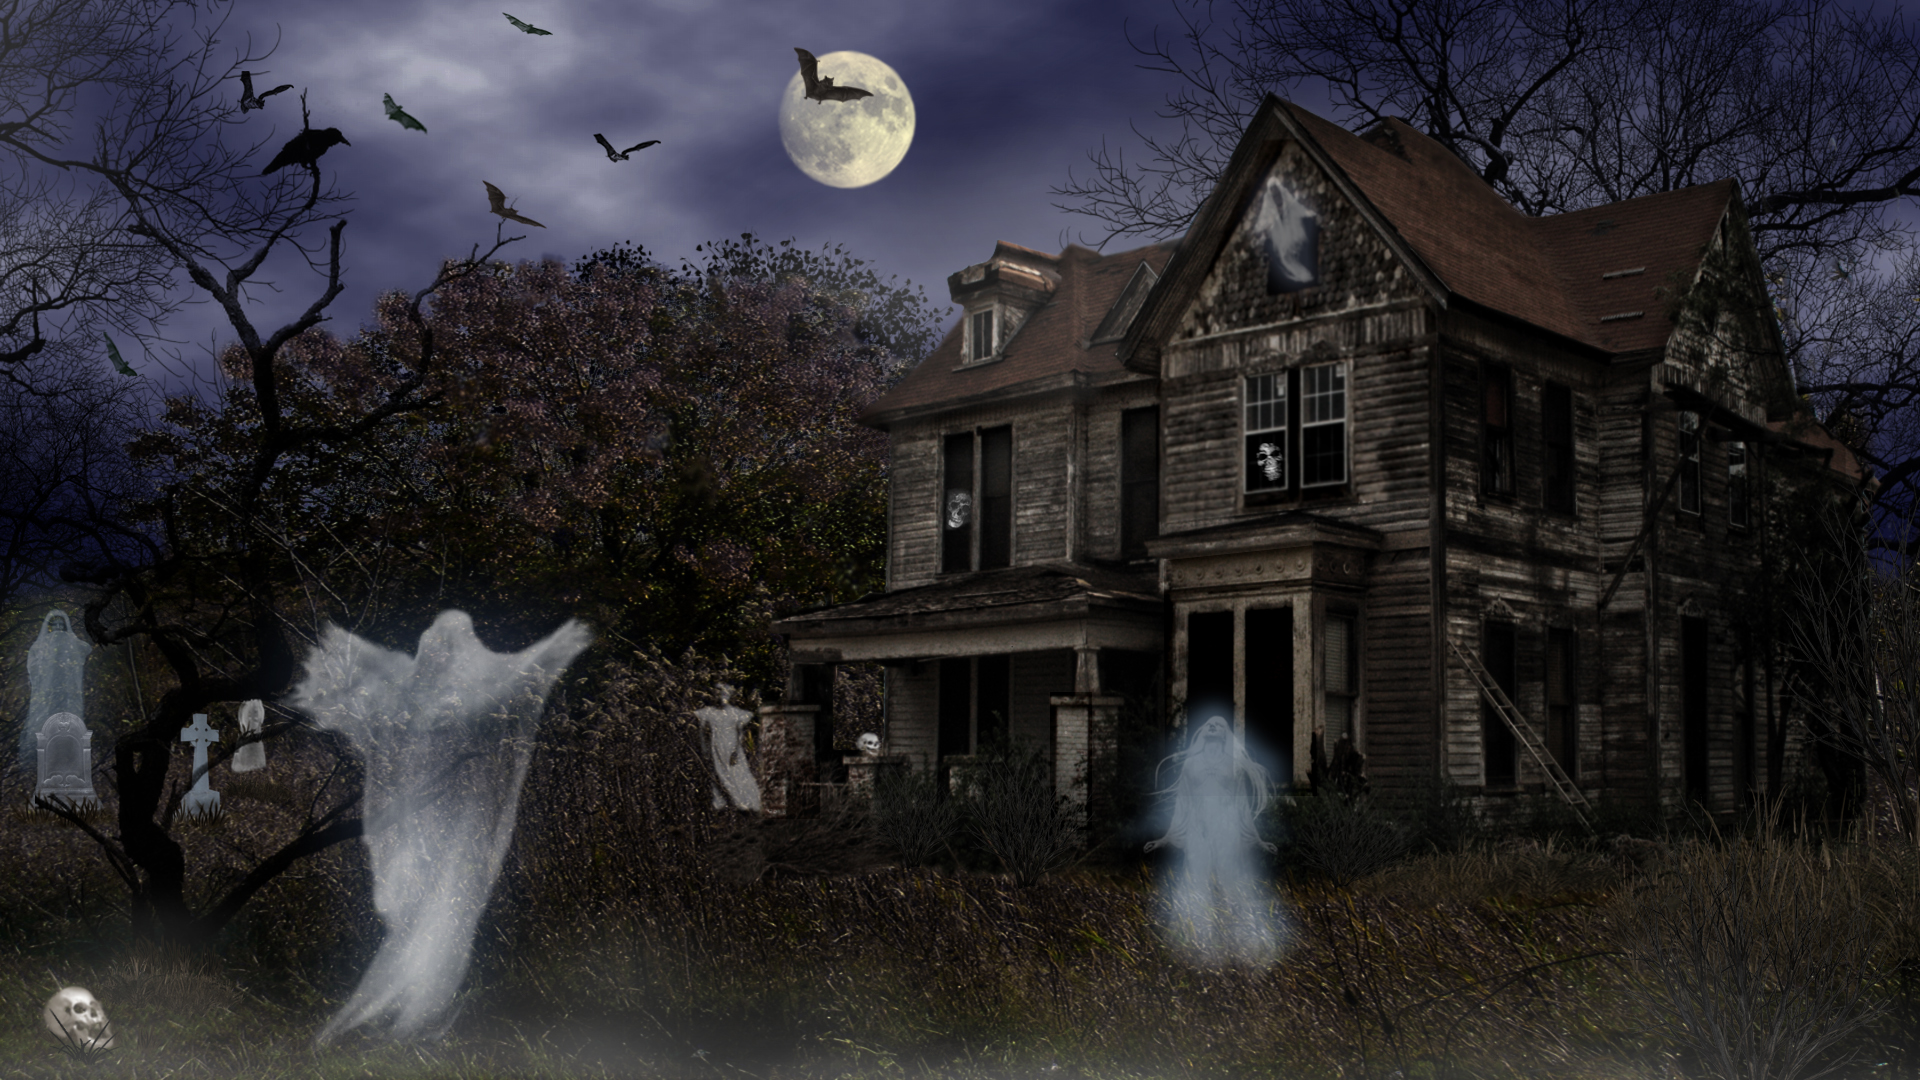  Explore Haunted Mortuary Halloween wallpapers HD   182269 1920x1080